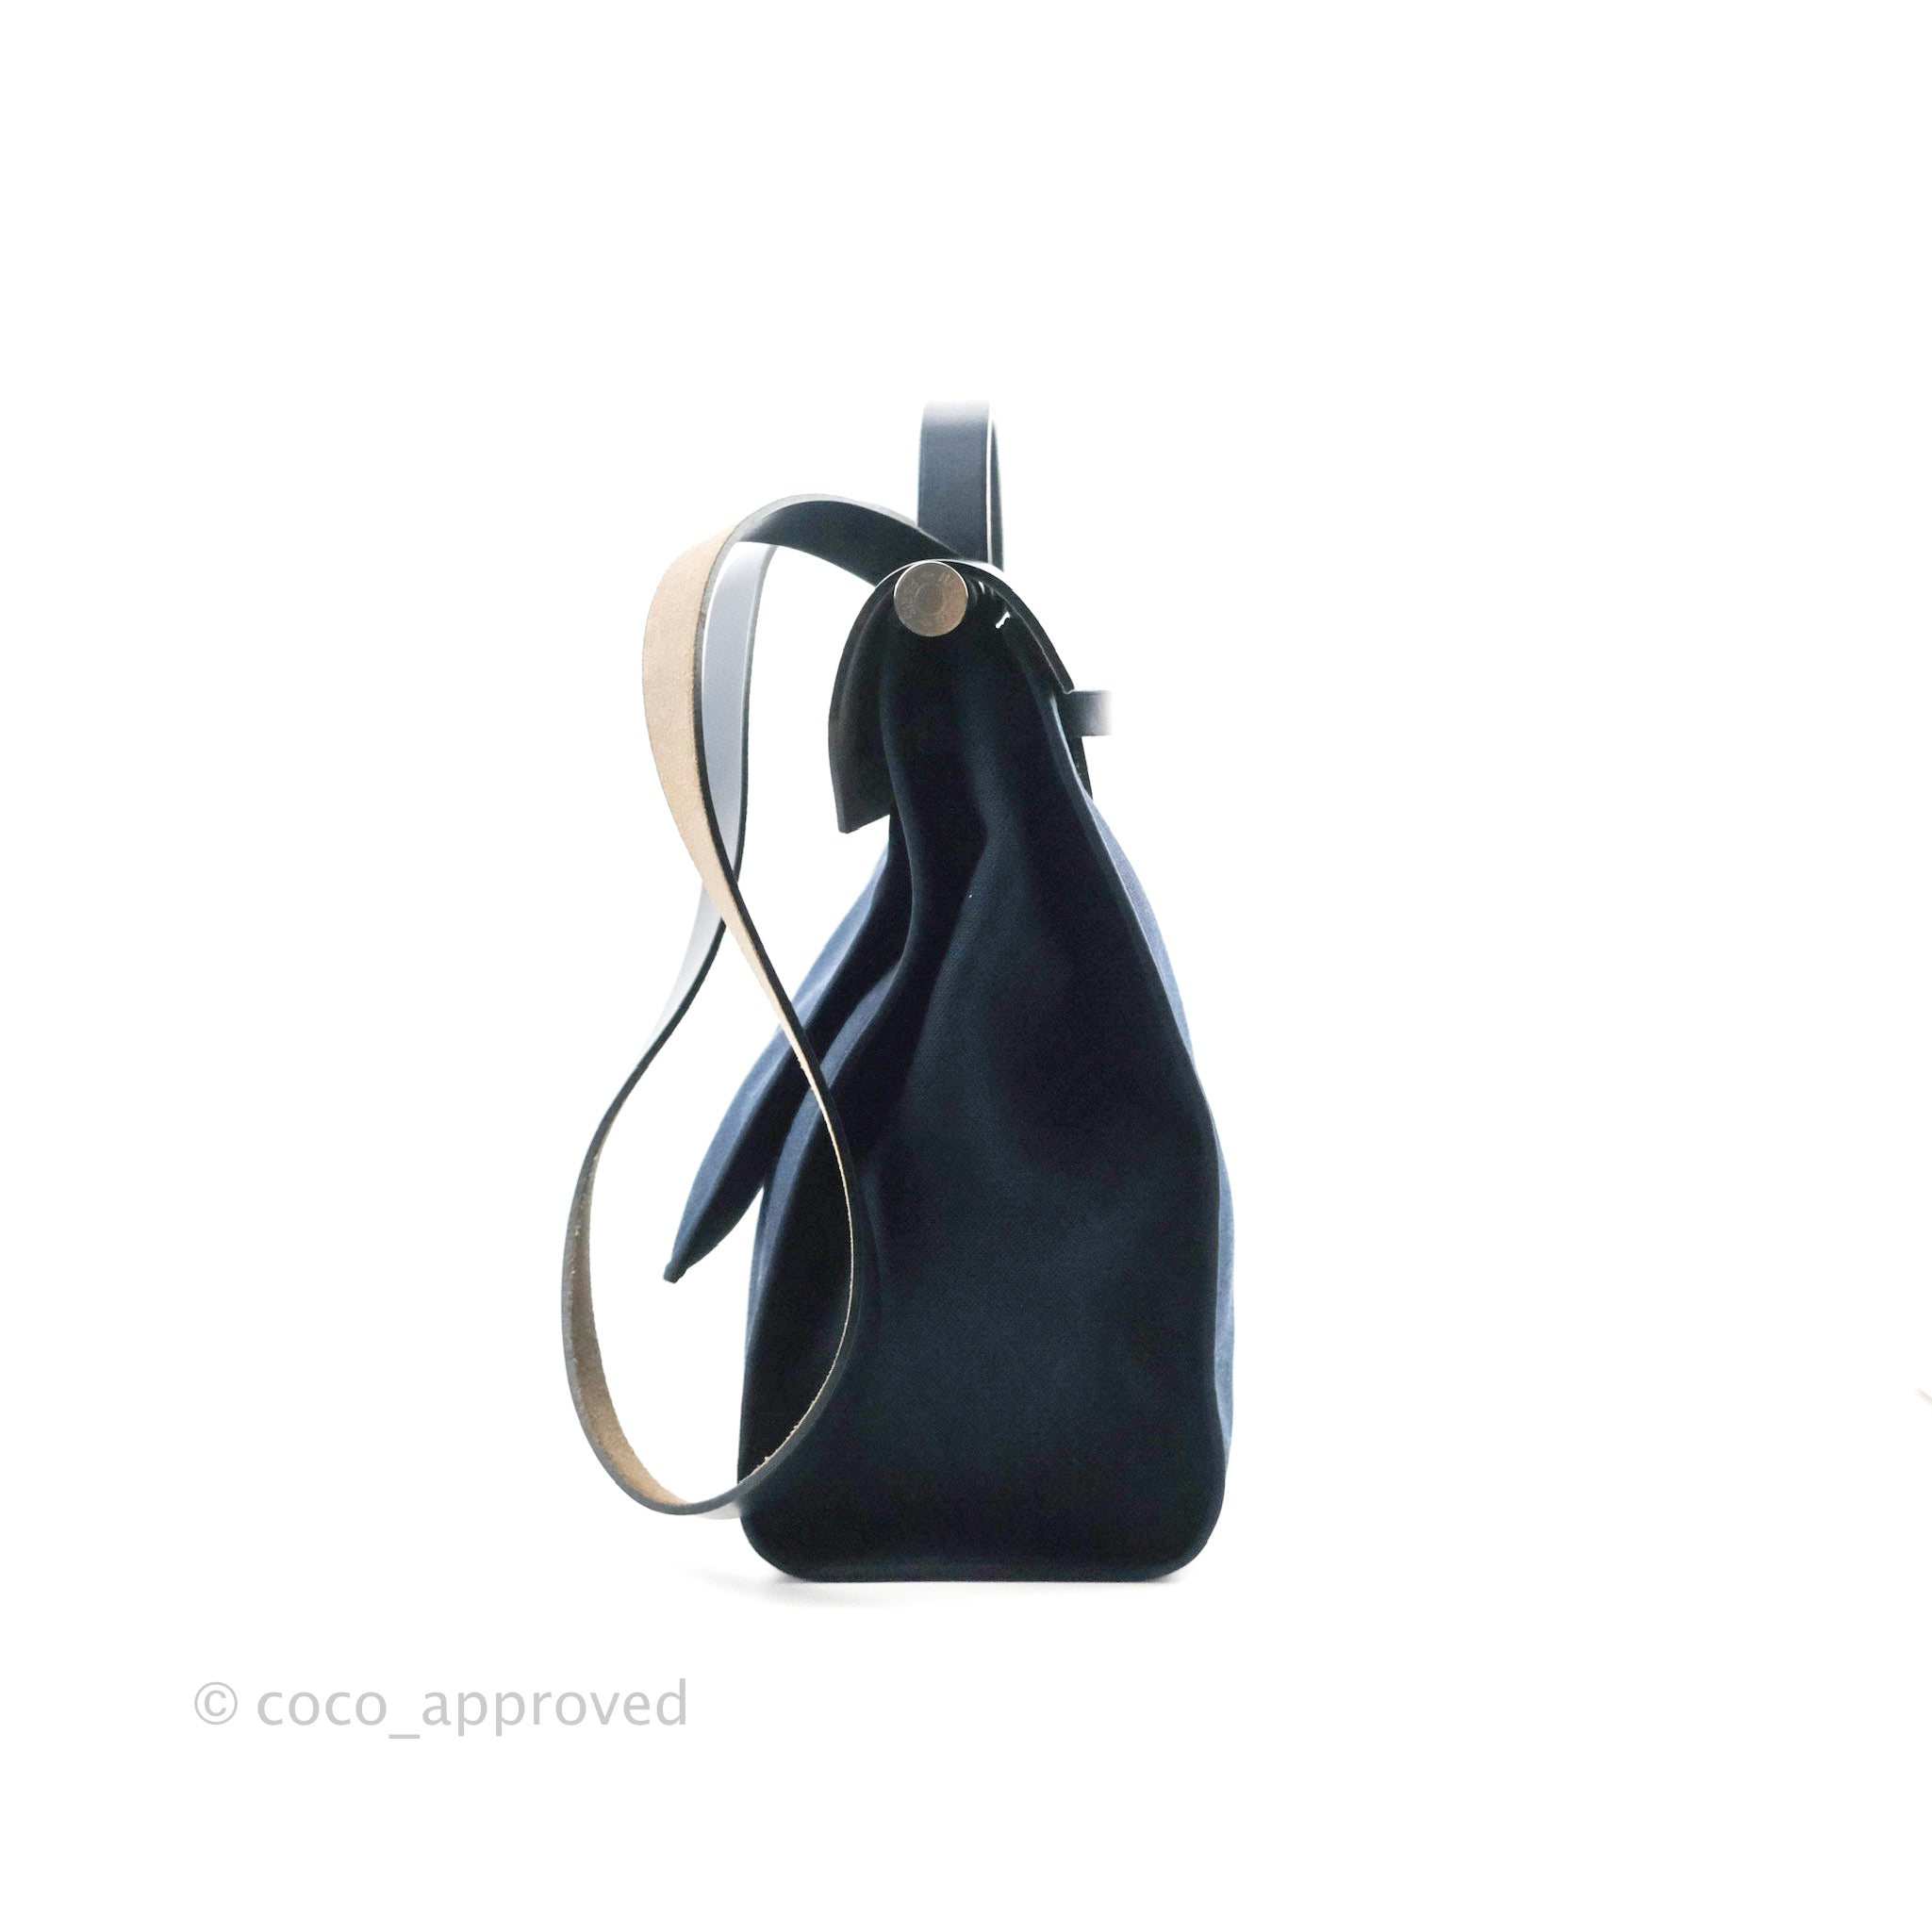 Hermès Herbag Zip 39 Bag - Black Totes, Handbags - HER22435